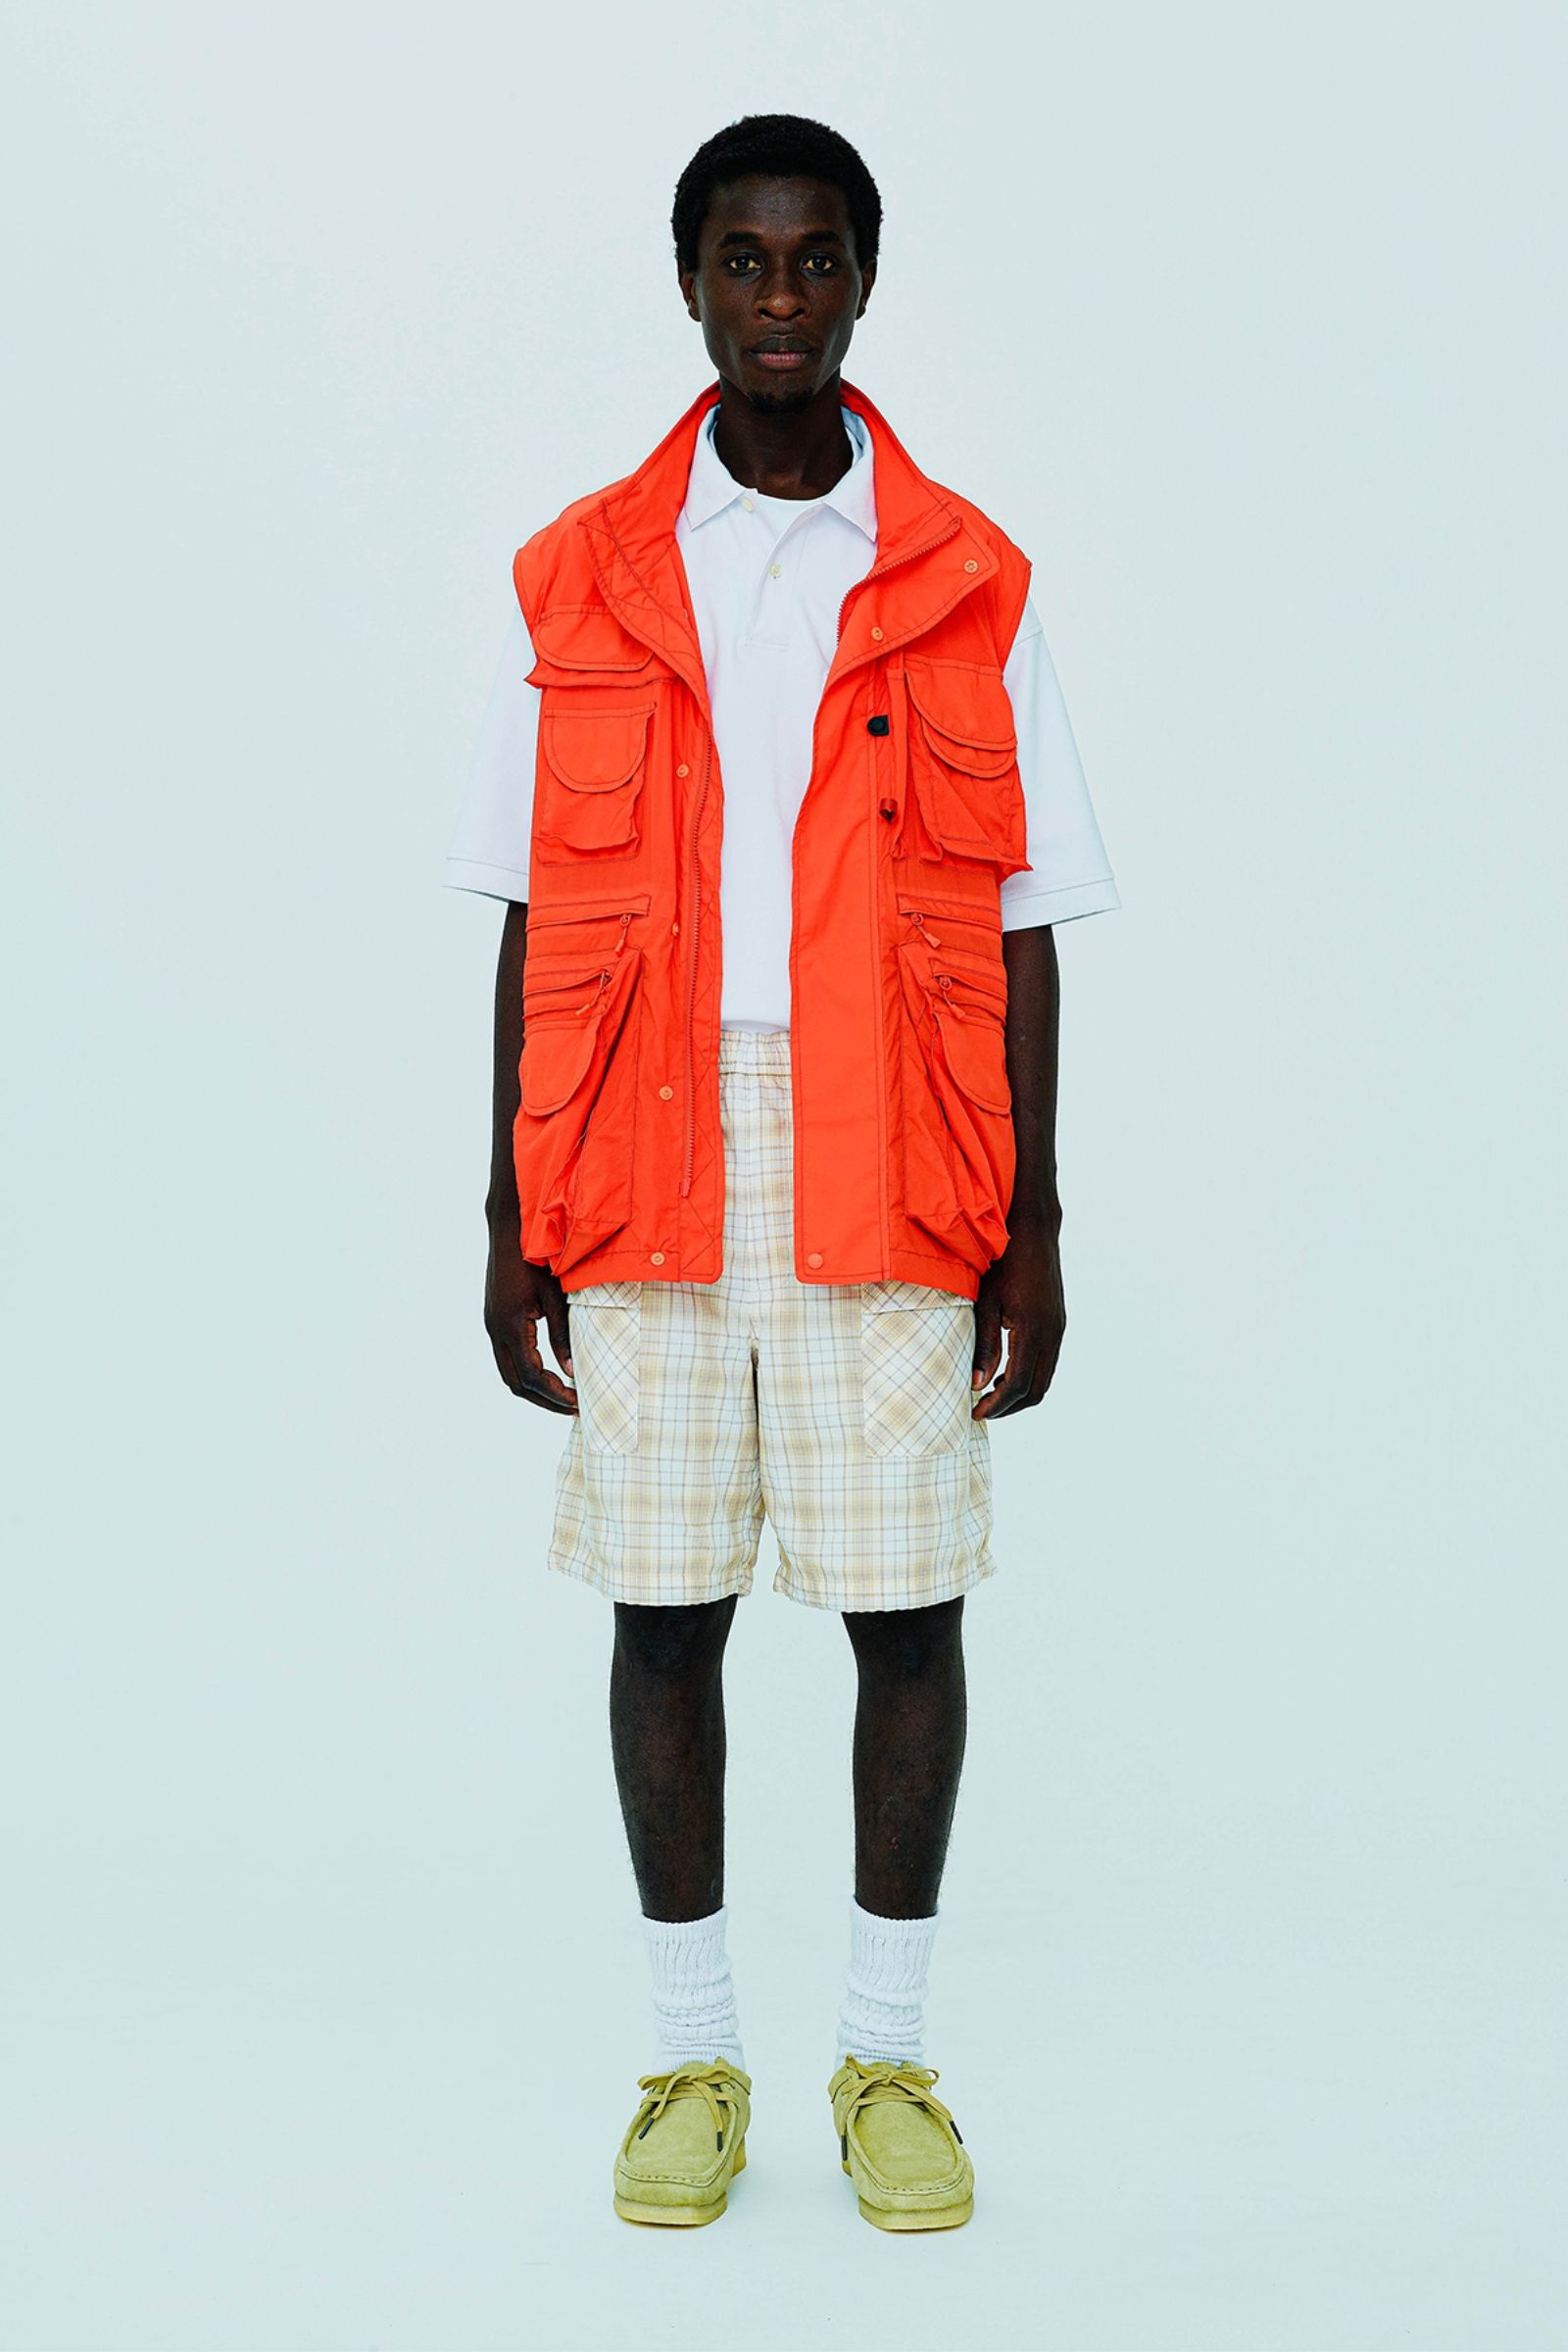 DAIWA PIER39 パーフェクトフィッシングジャケット tech 2way perfect fishing jacket -orange-  23ss men asterisk